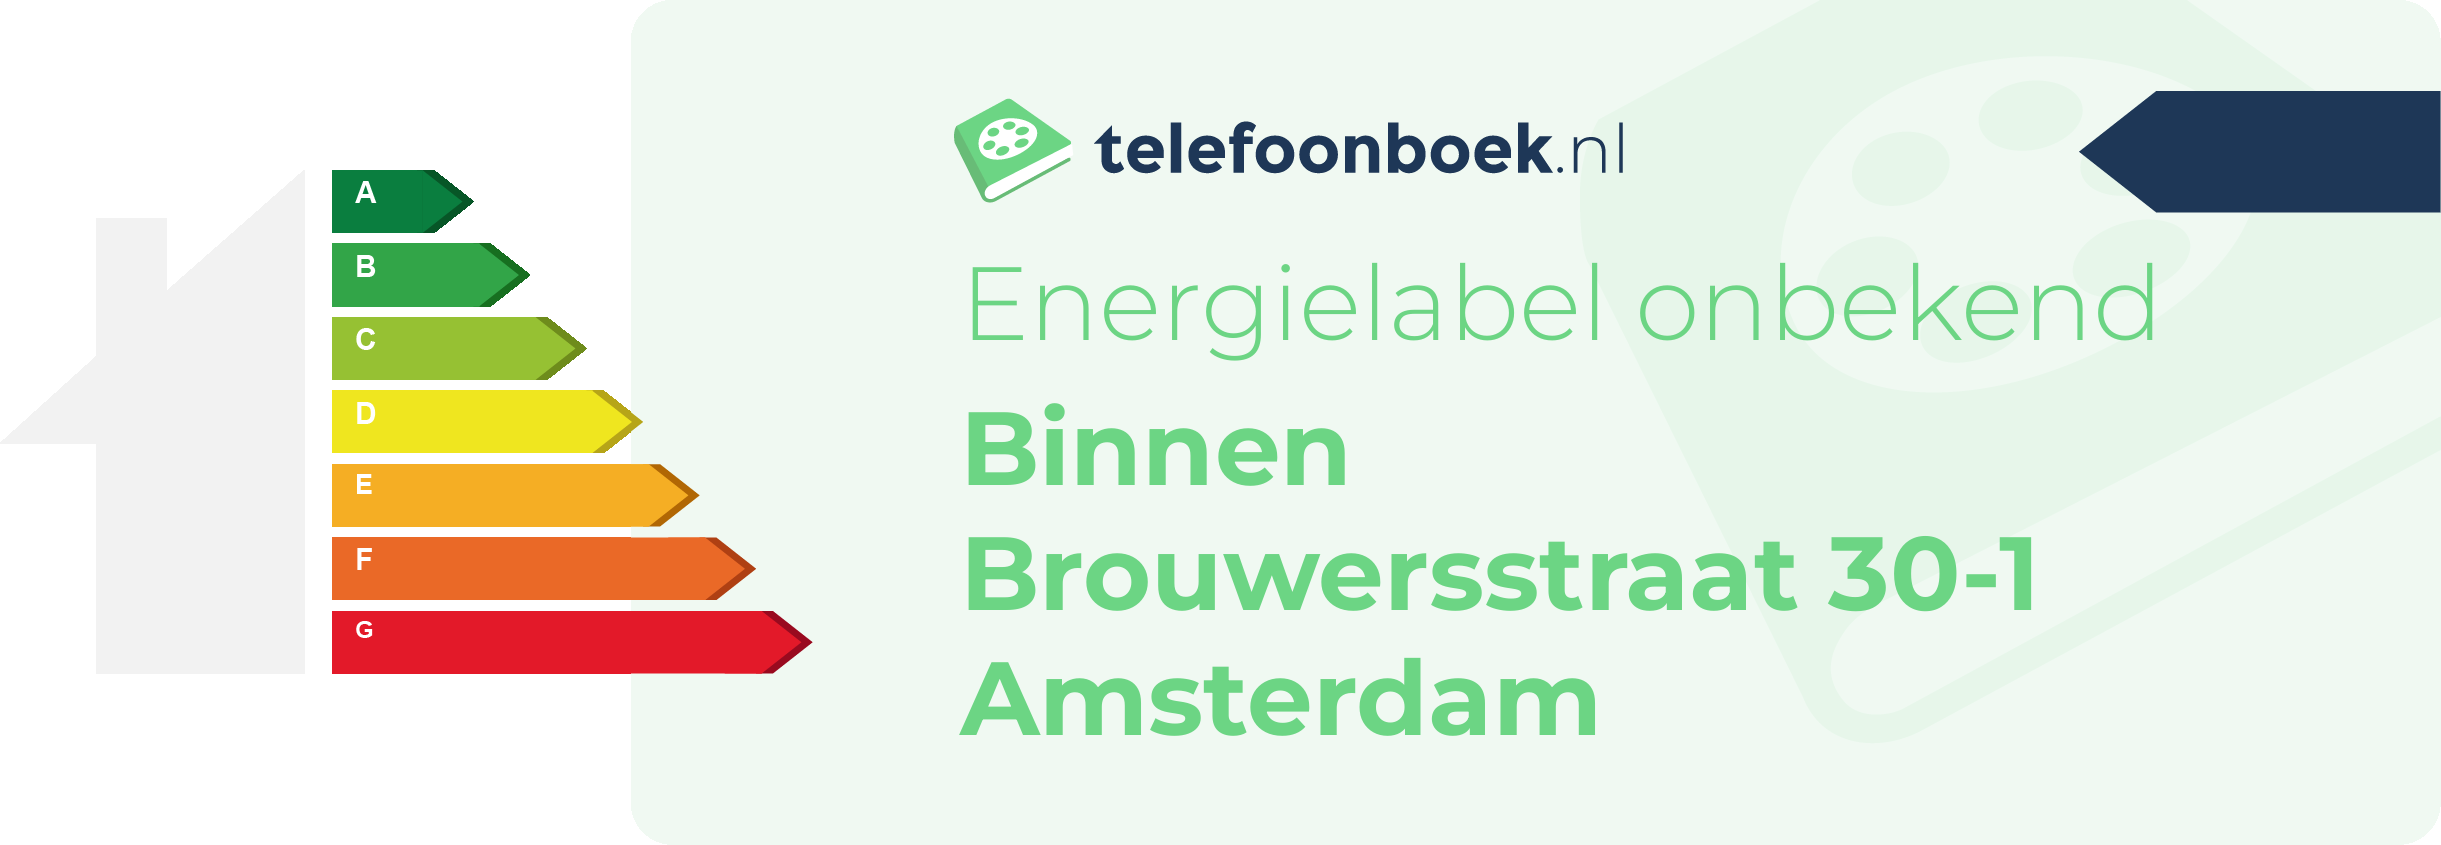 Energielabel Binnen Brouwersstraat 30-1 Amsterdam